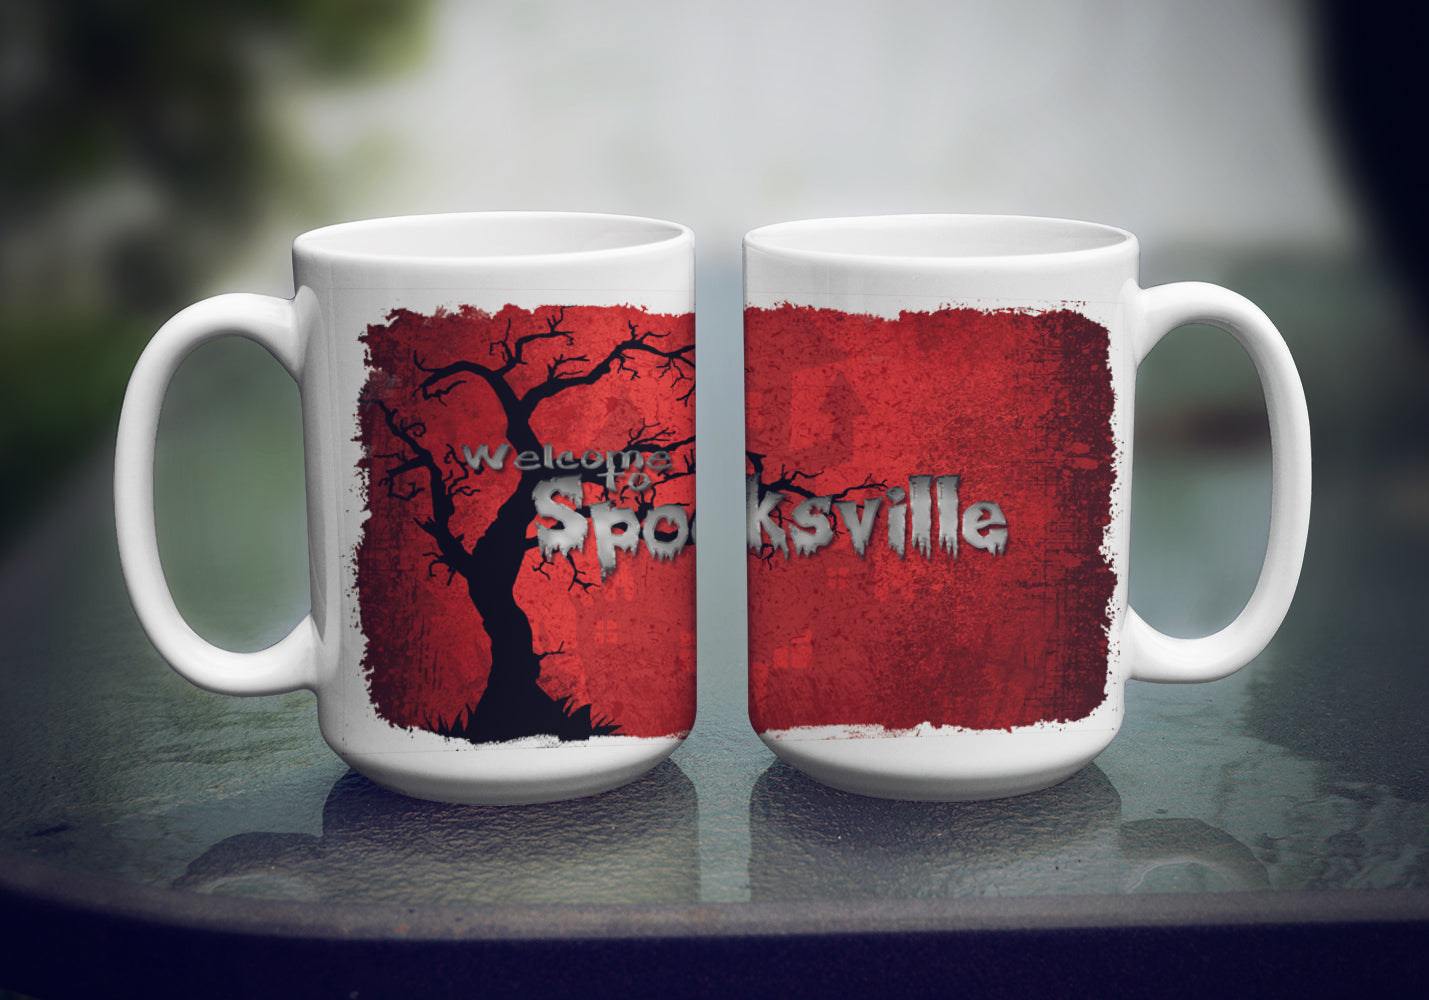 Welcome to Spooksville Halloween Dishwasher Safe Microwavable Ceramic Coffee Mug 15 ounce SB3008CM15